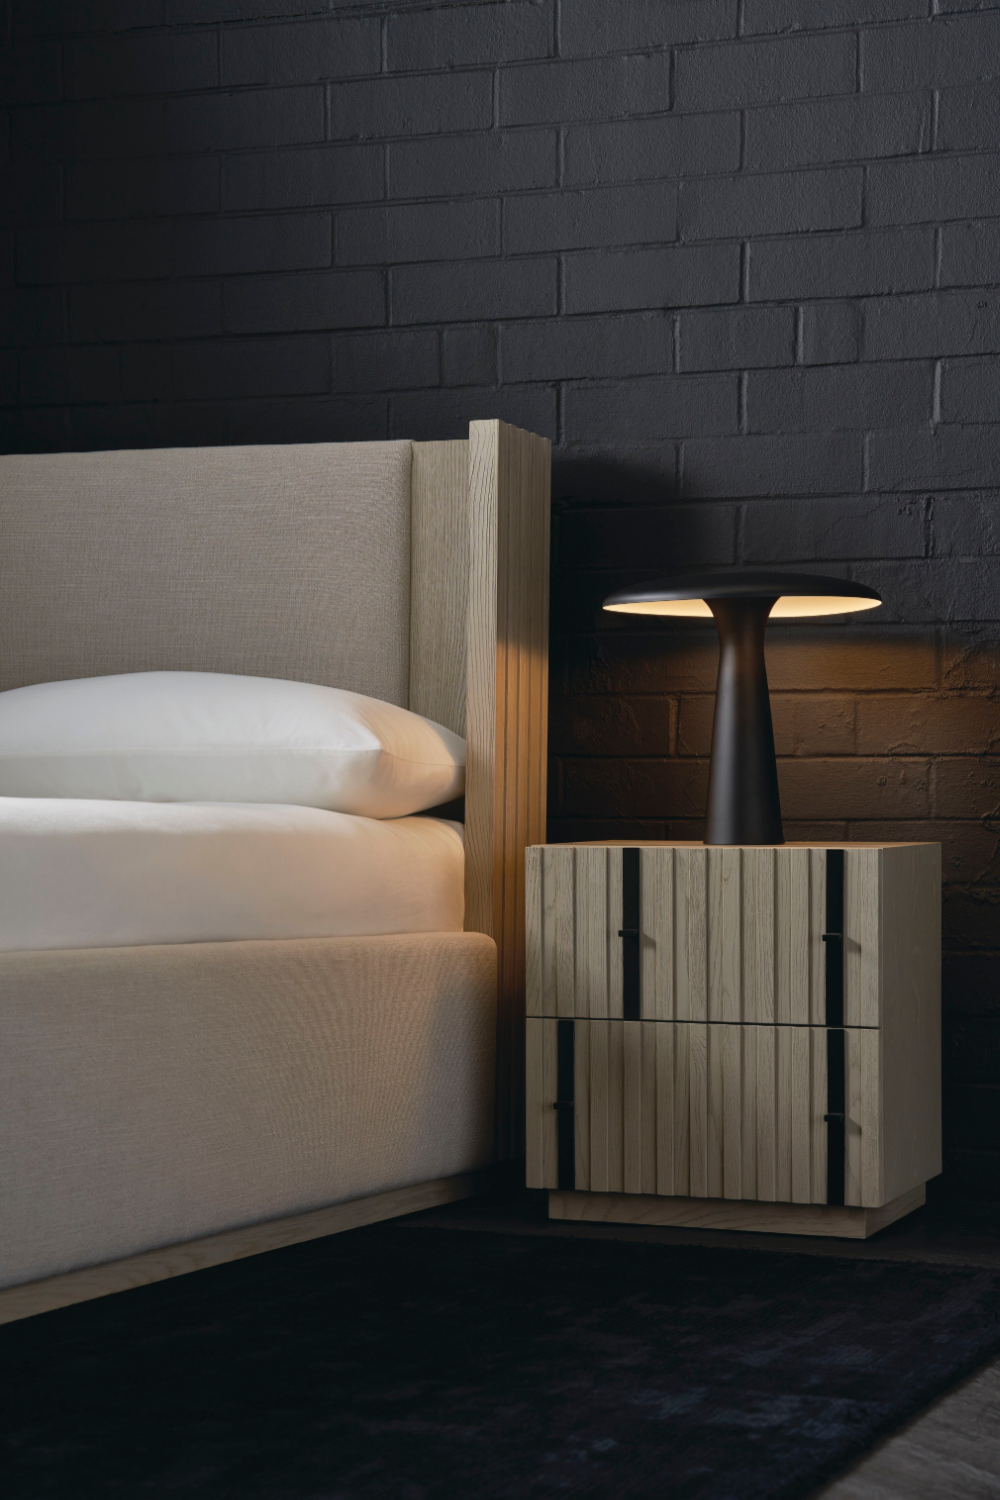 Taupe Linen Bed | Caracole Azure | Oroa.com